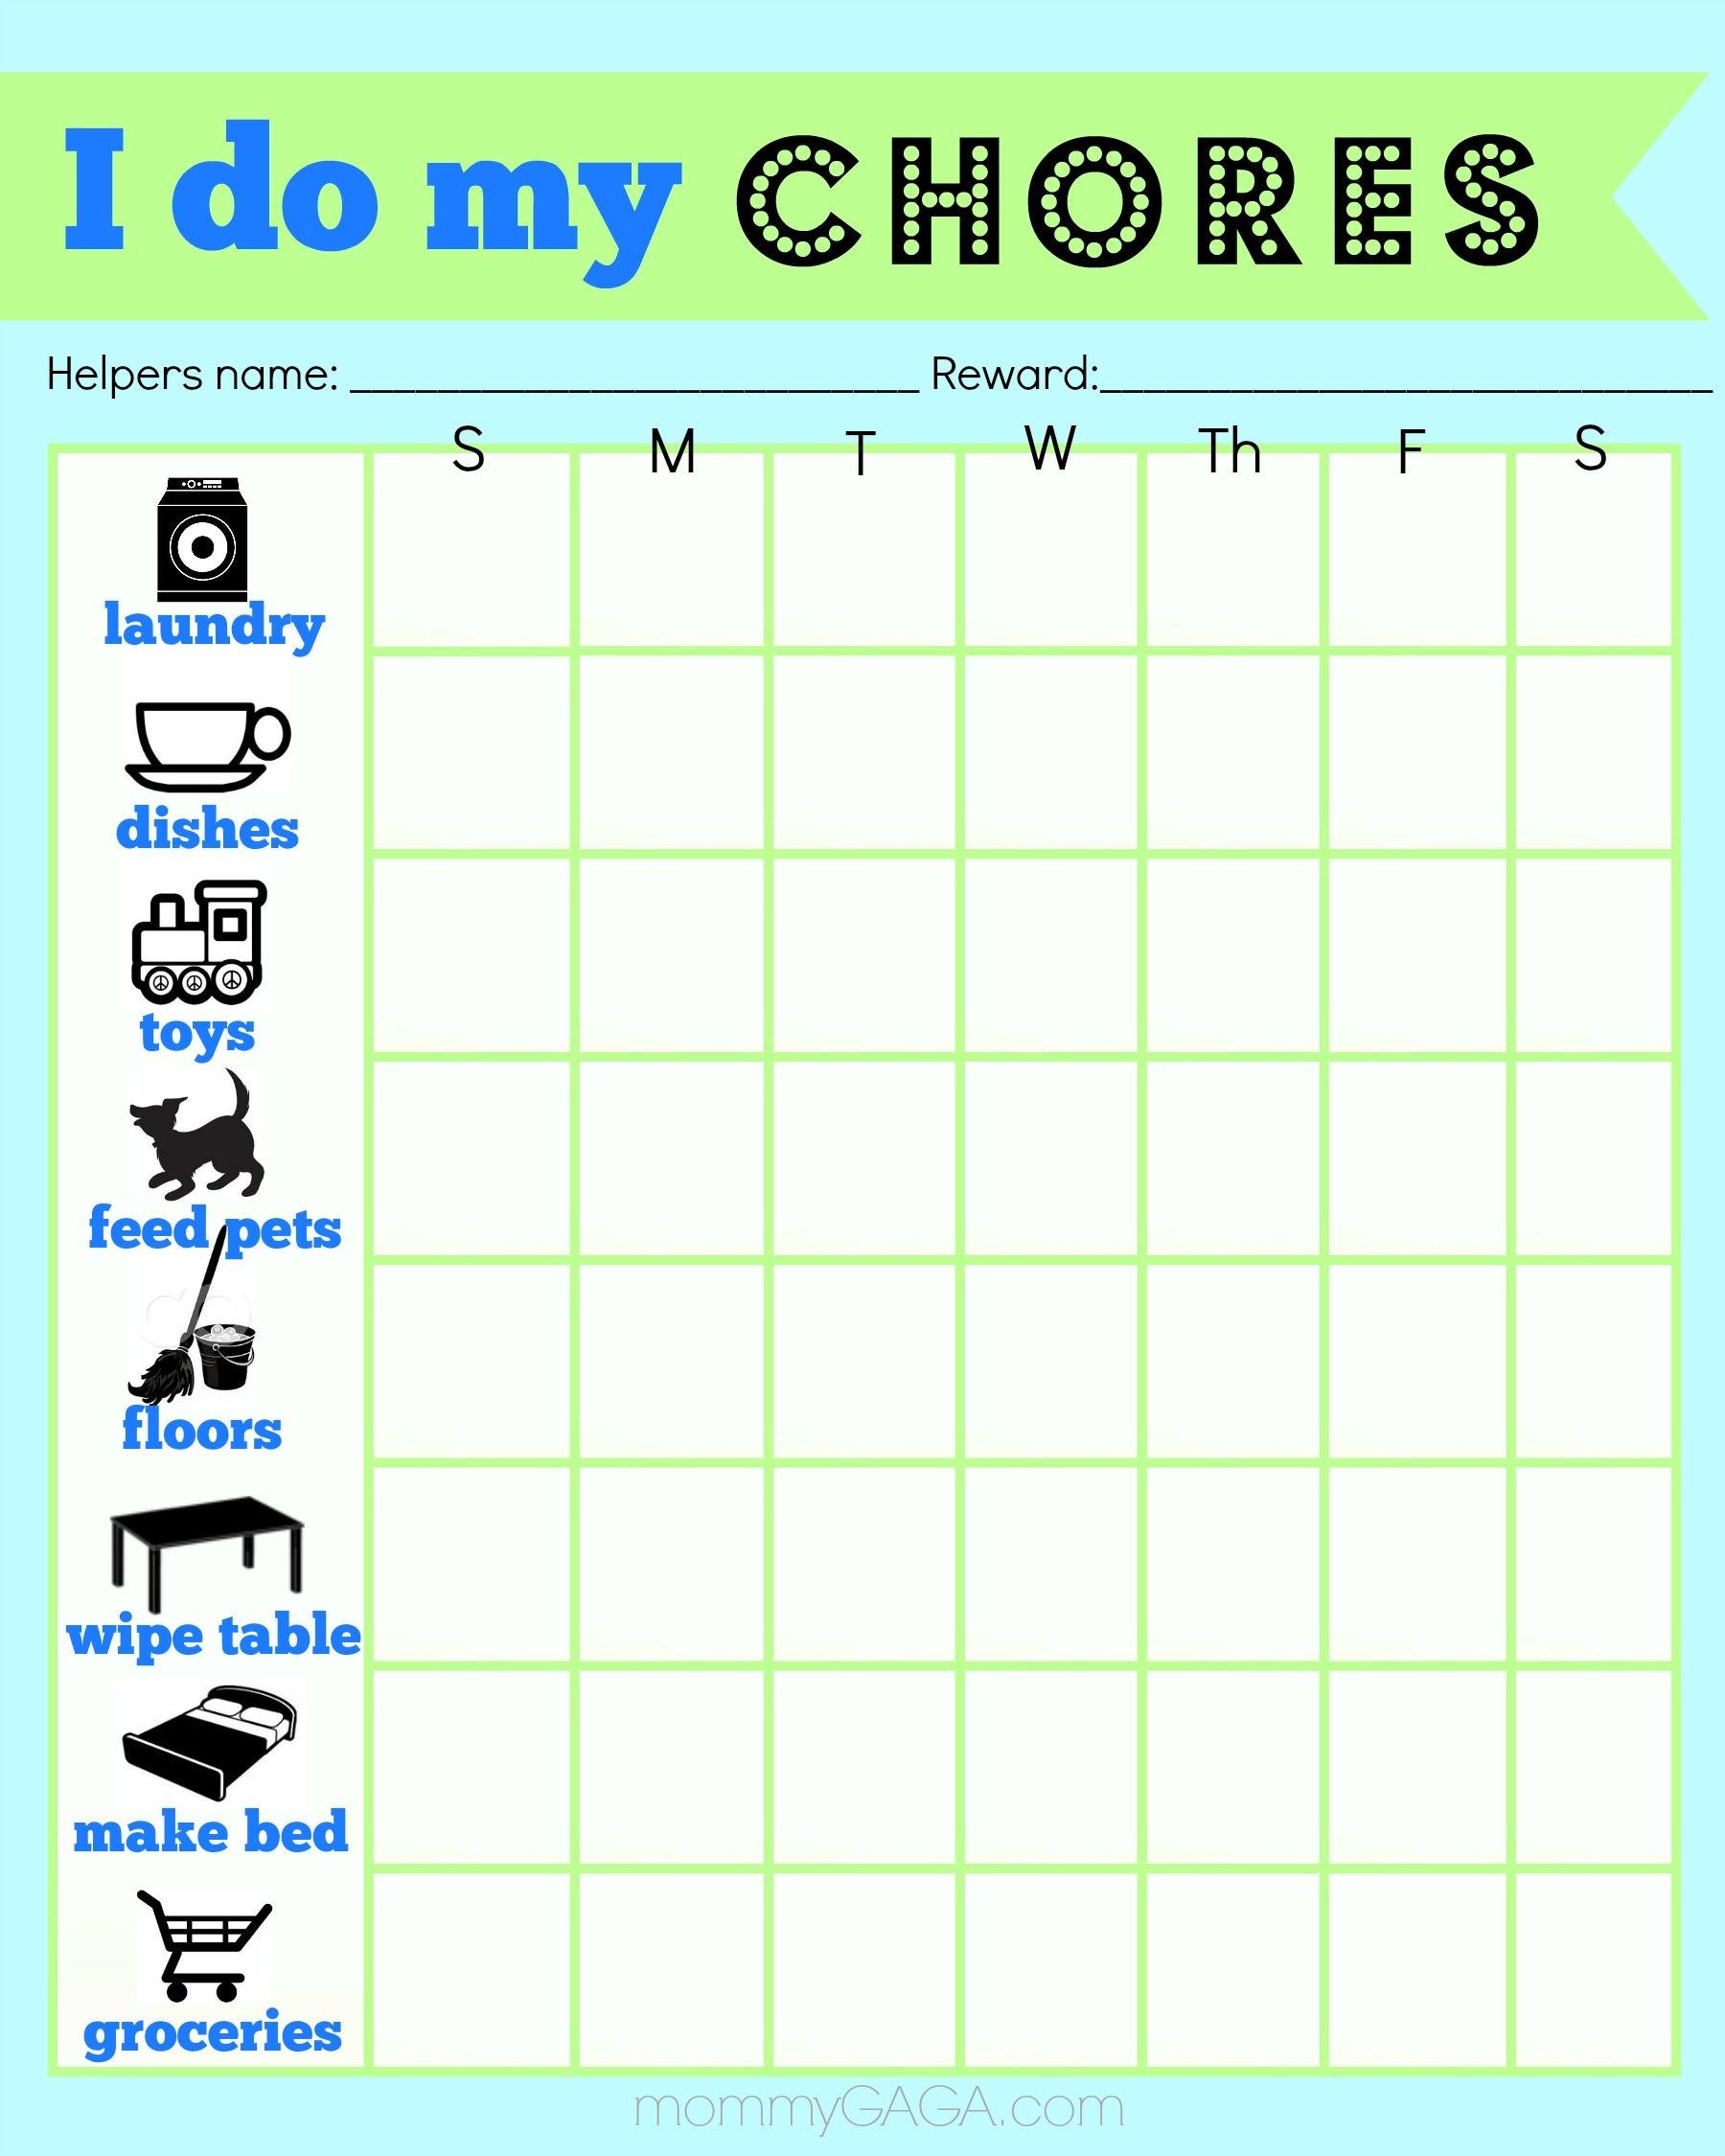 10-chores-for-preschoolers-a-printable-chore-chart-honey-lime-gambaran